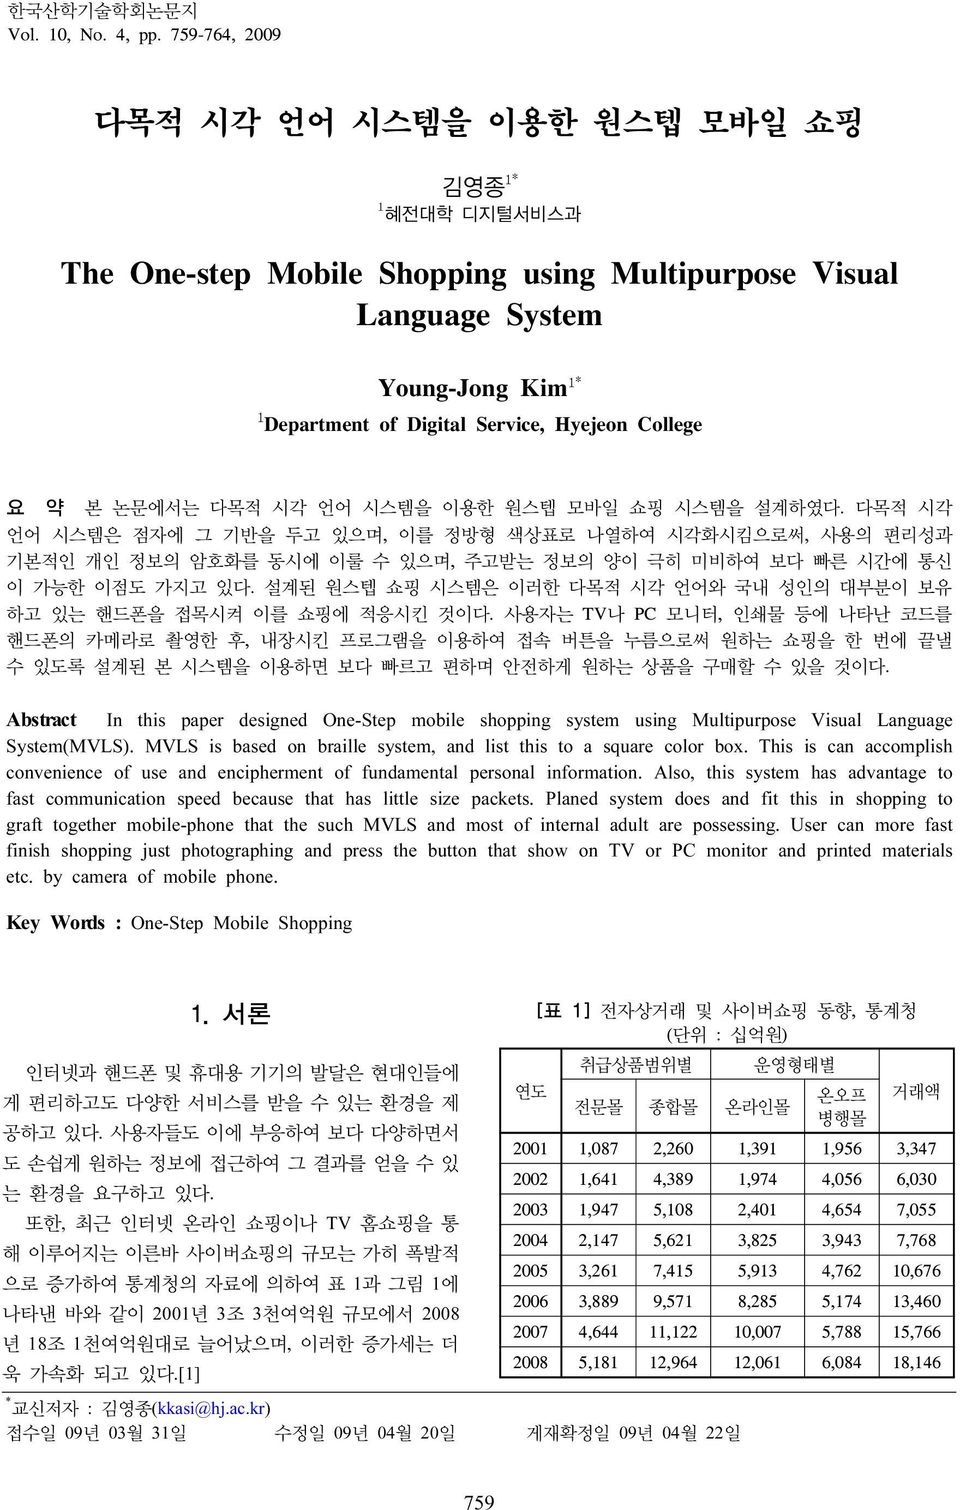 College 요 약 본 논문에서는 다목적 시각 언어 시스템을 이용한 원스텝 모바일 쇼핑 시스템을 설계하였다.